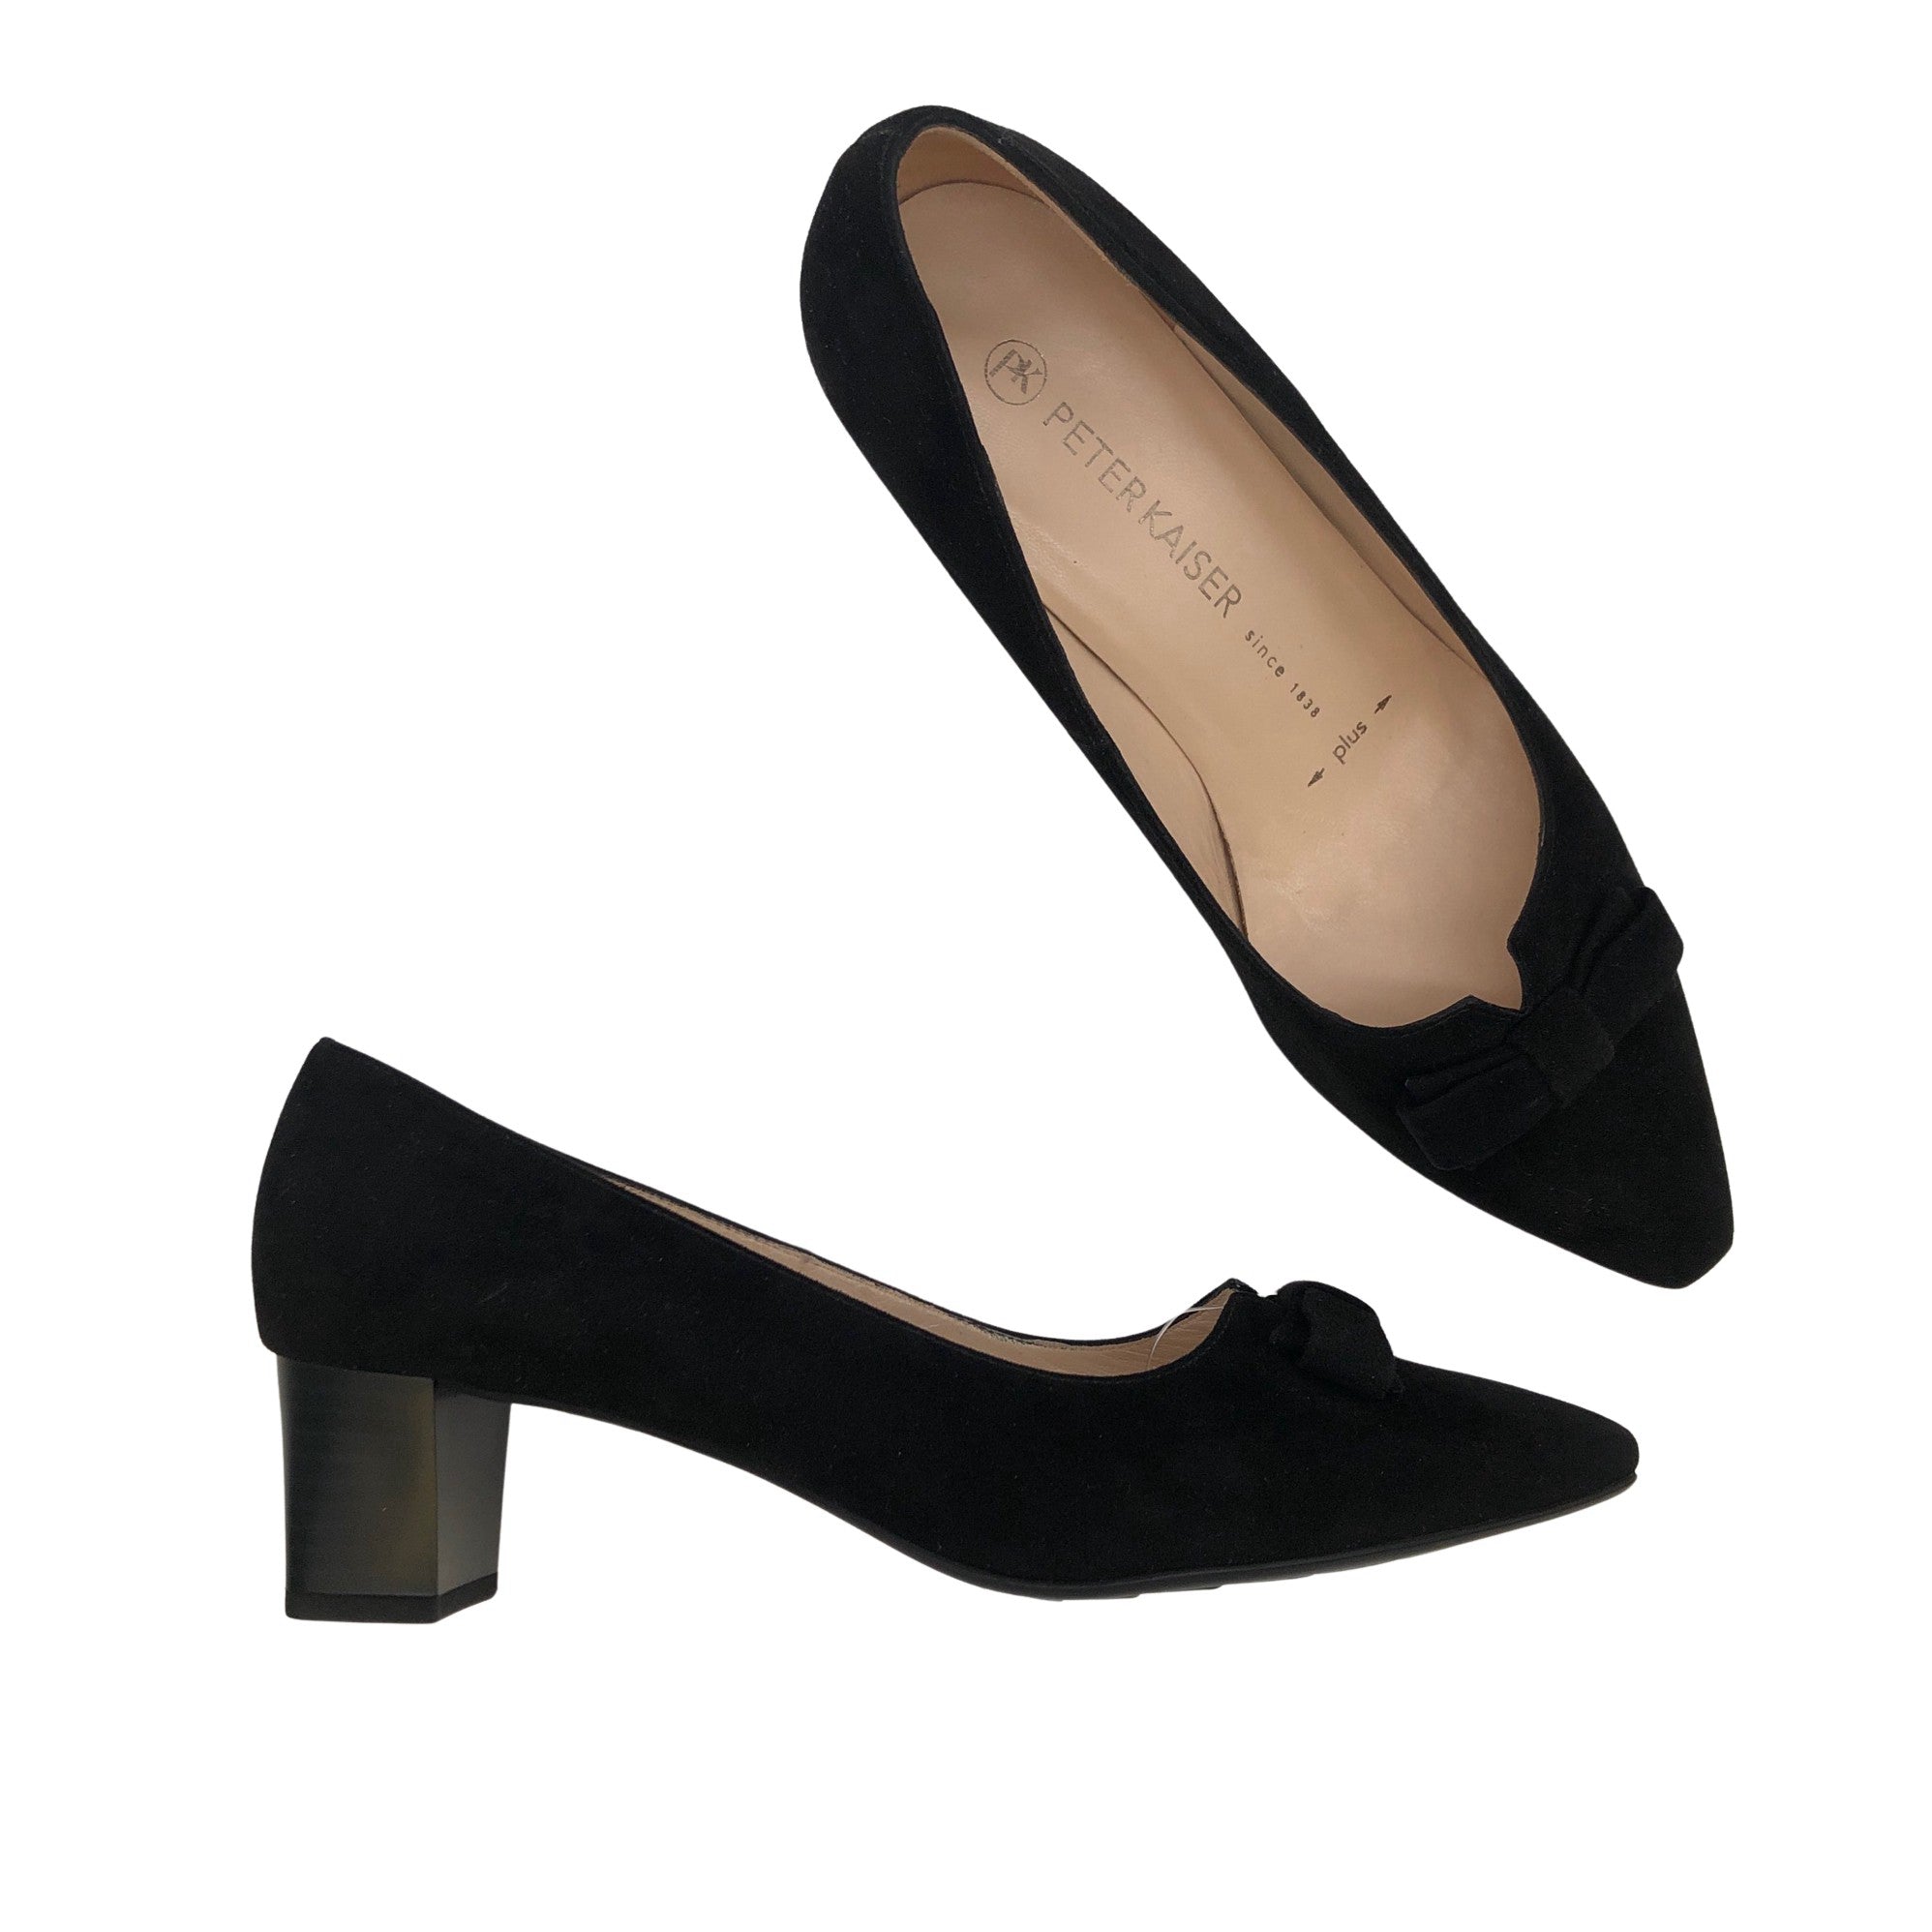 Kindercentrum moeder Verward Women's Peter Kaiser High heels, size 39 (Black) | Emmy